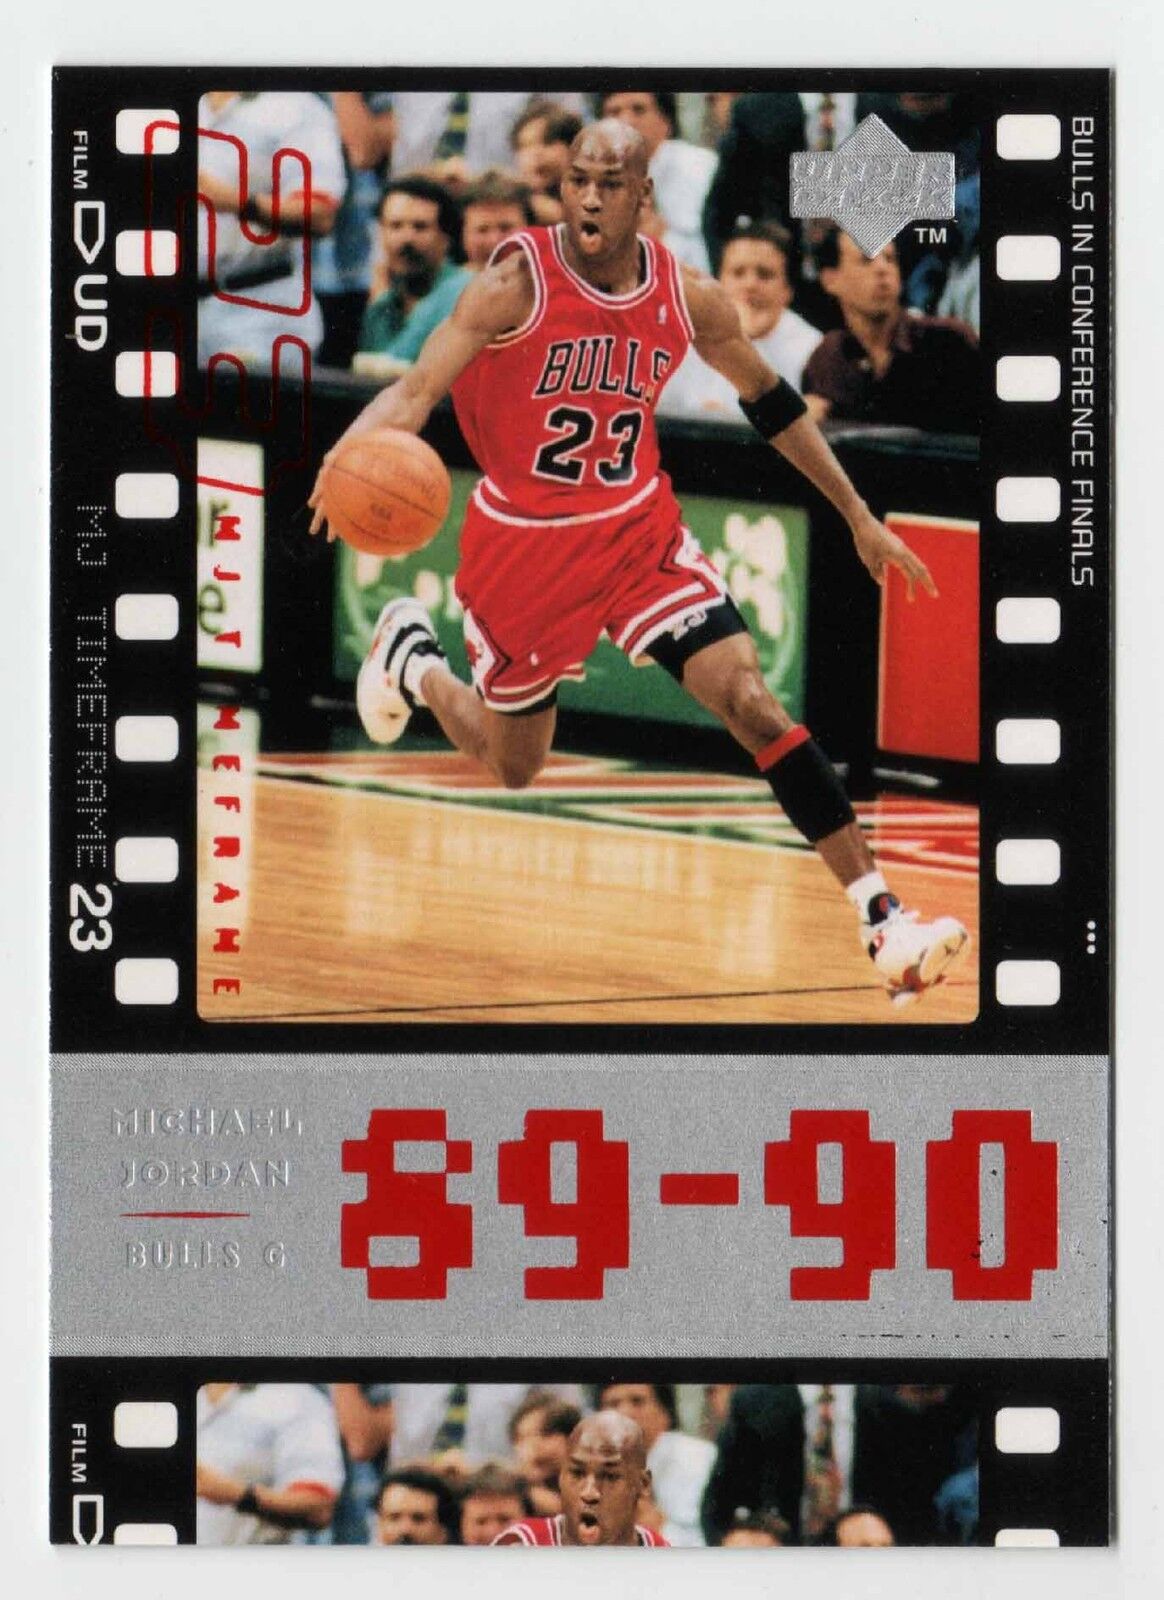 Michael Jordan 1998 Upper Deck Timeframe23 89-90 Bulls in conference final  card